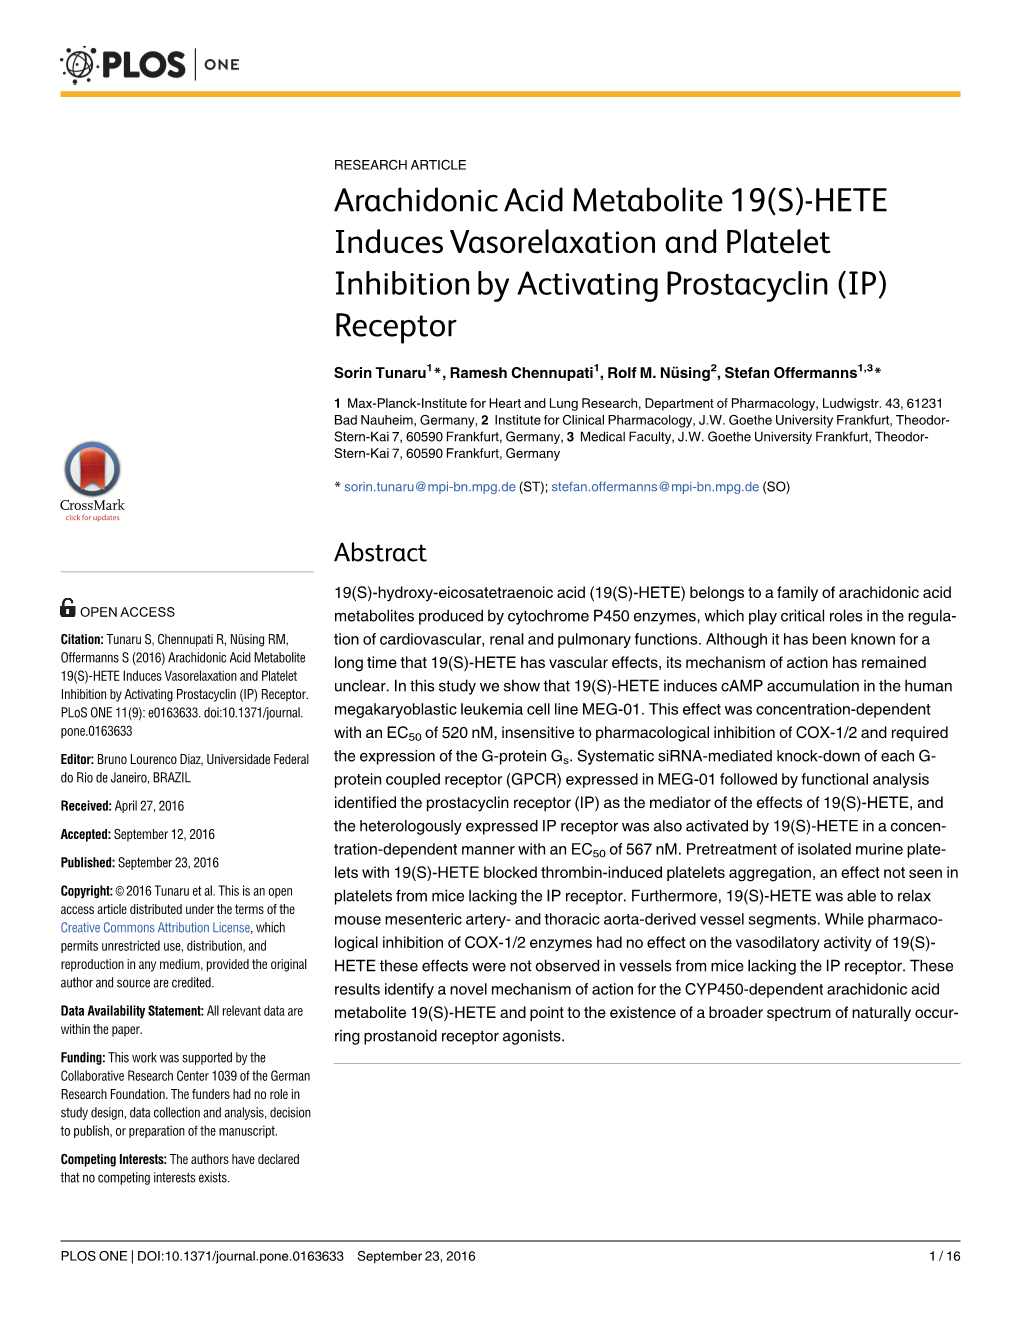 Arachidonic Acid Metabolite 19(S)-HETE Induces Vasorelaxation and Platelet Inhibition by Activating Prostacyclin (IP) Receptor